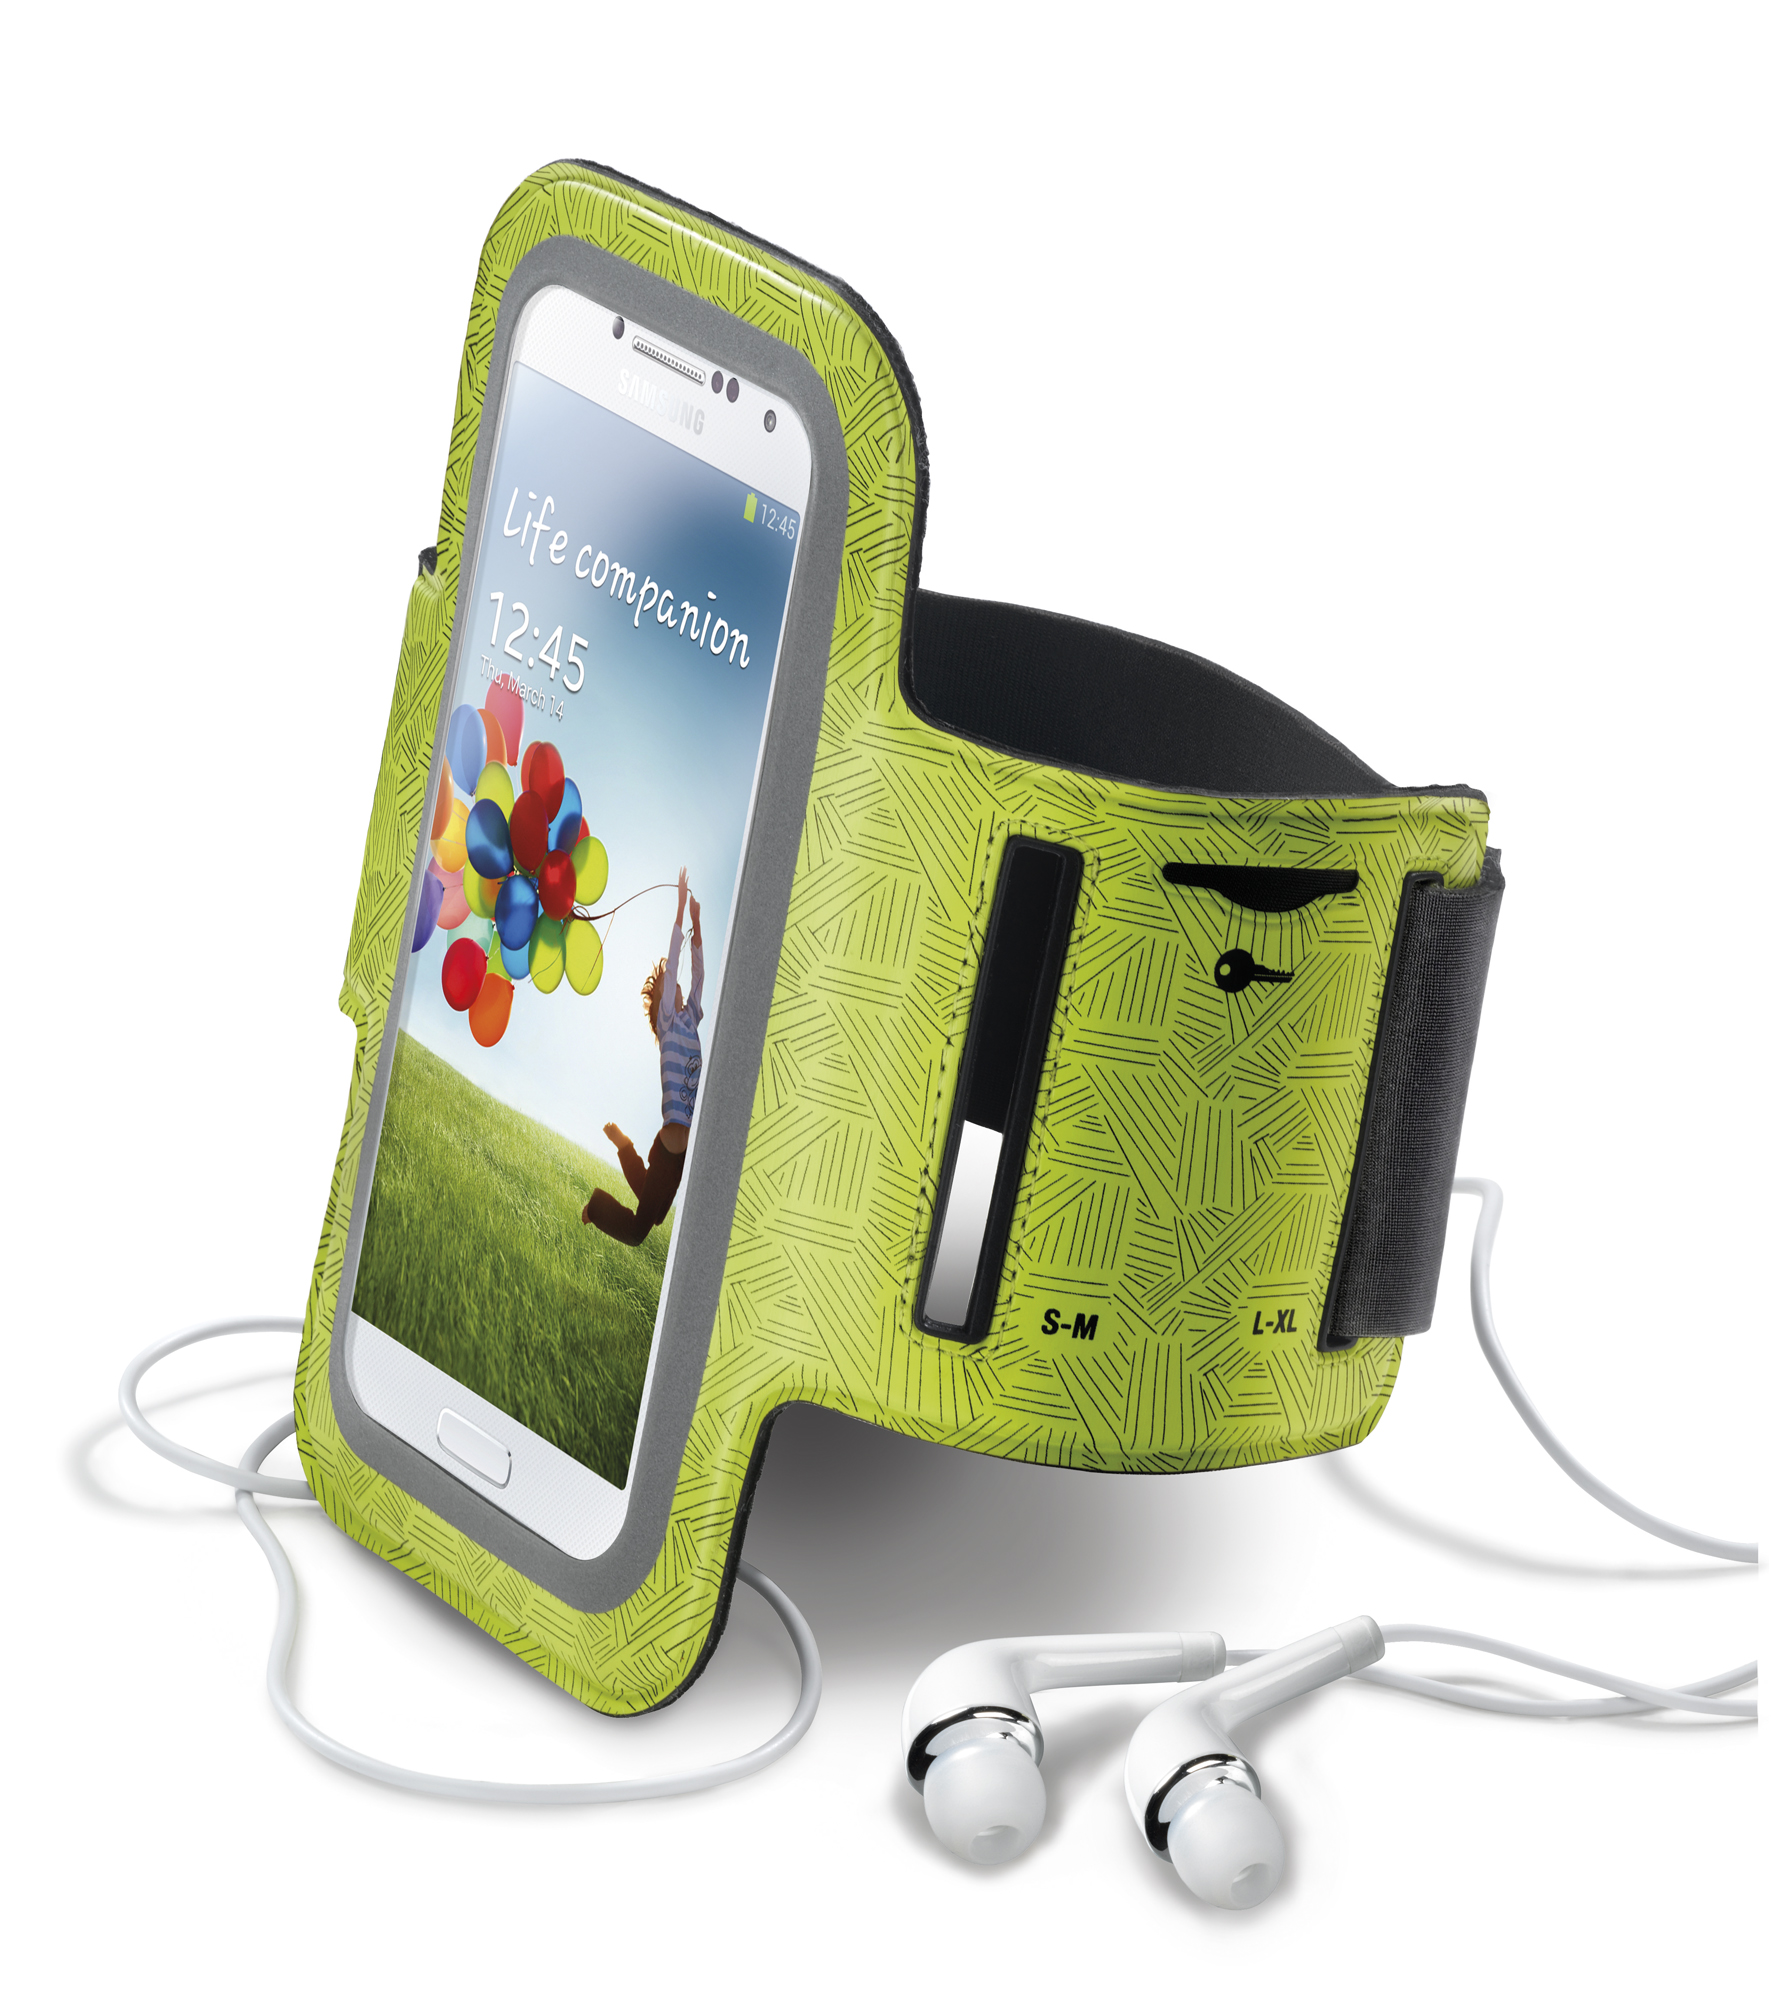 Armband, smartphone 5", lime green